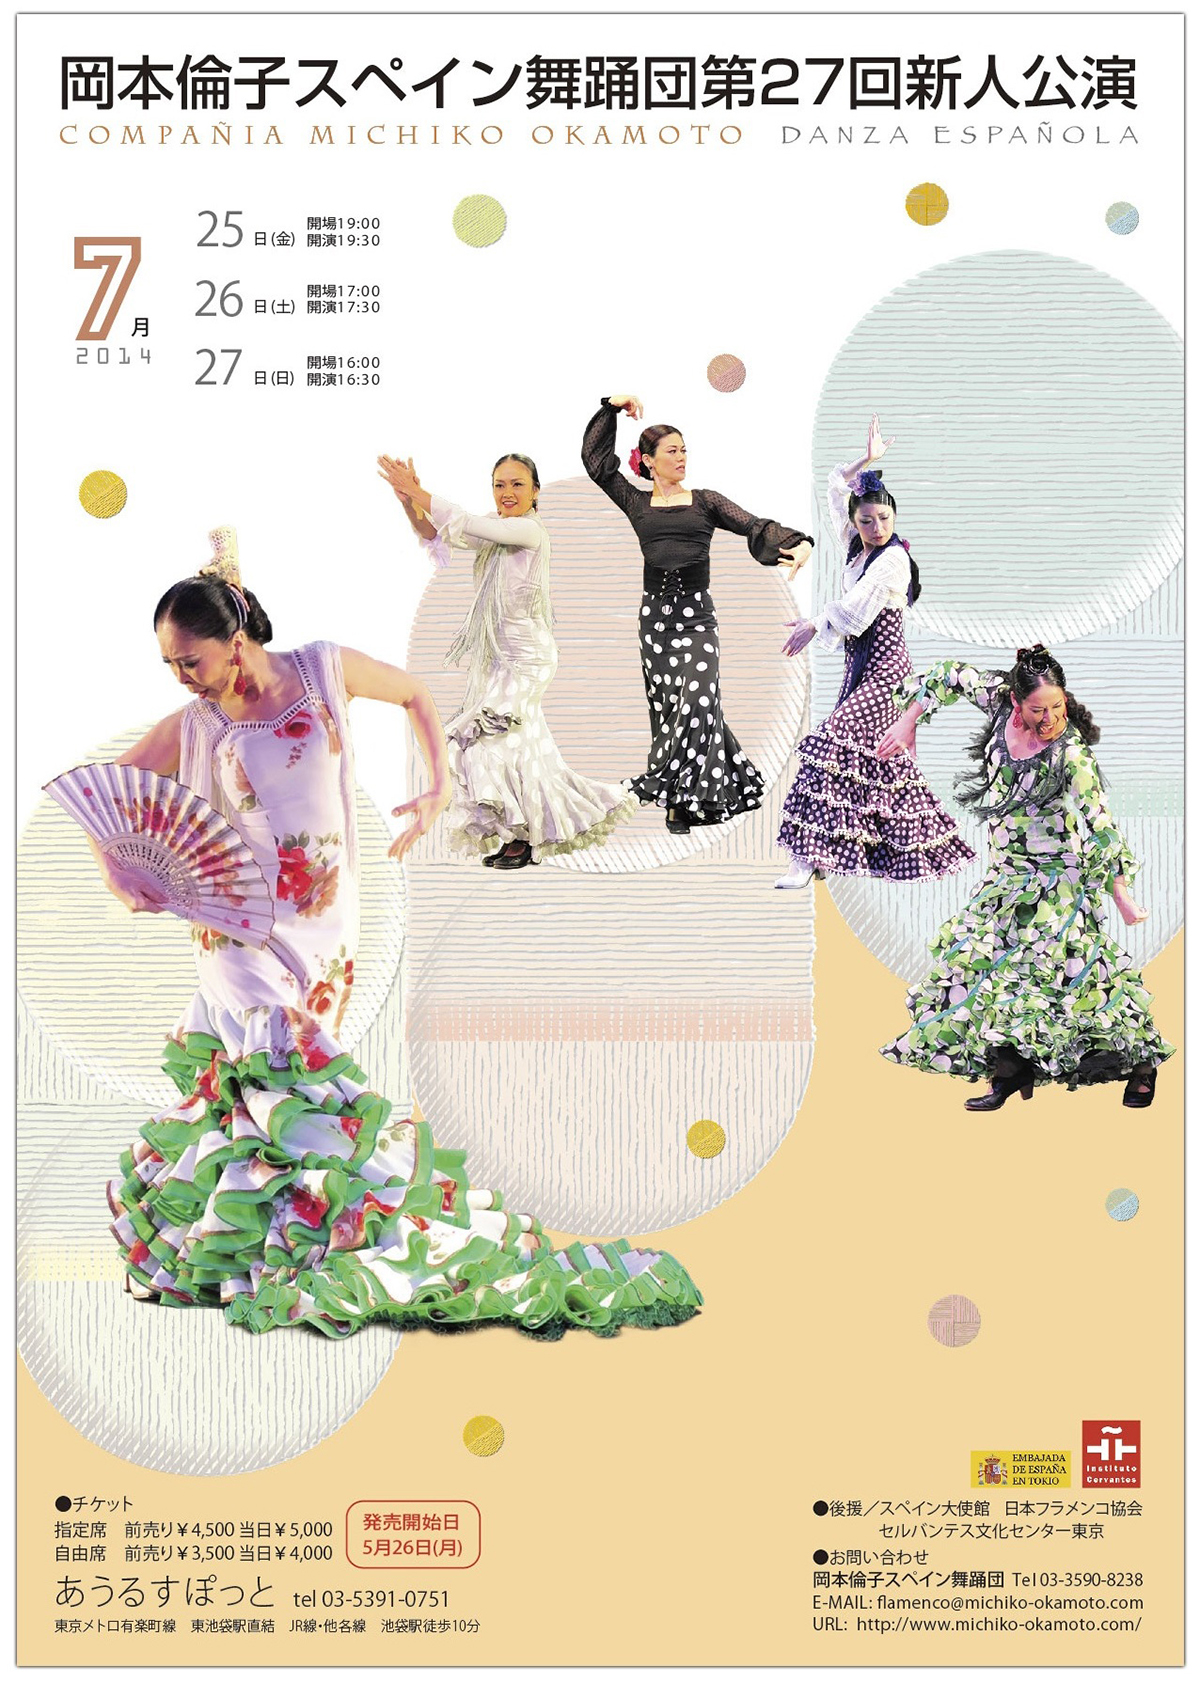 岡本倫子スペイン舞踊団第27回新人公演